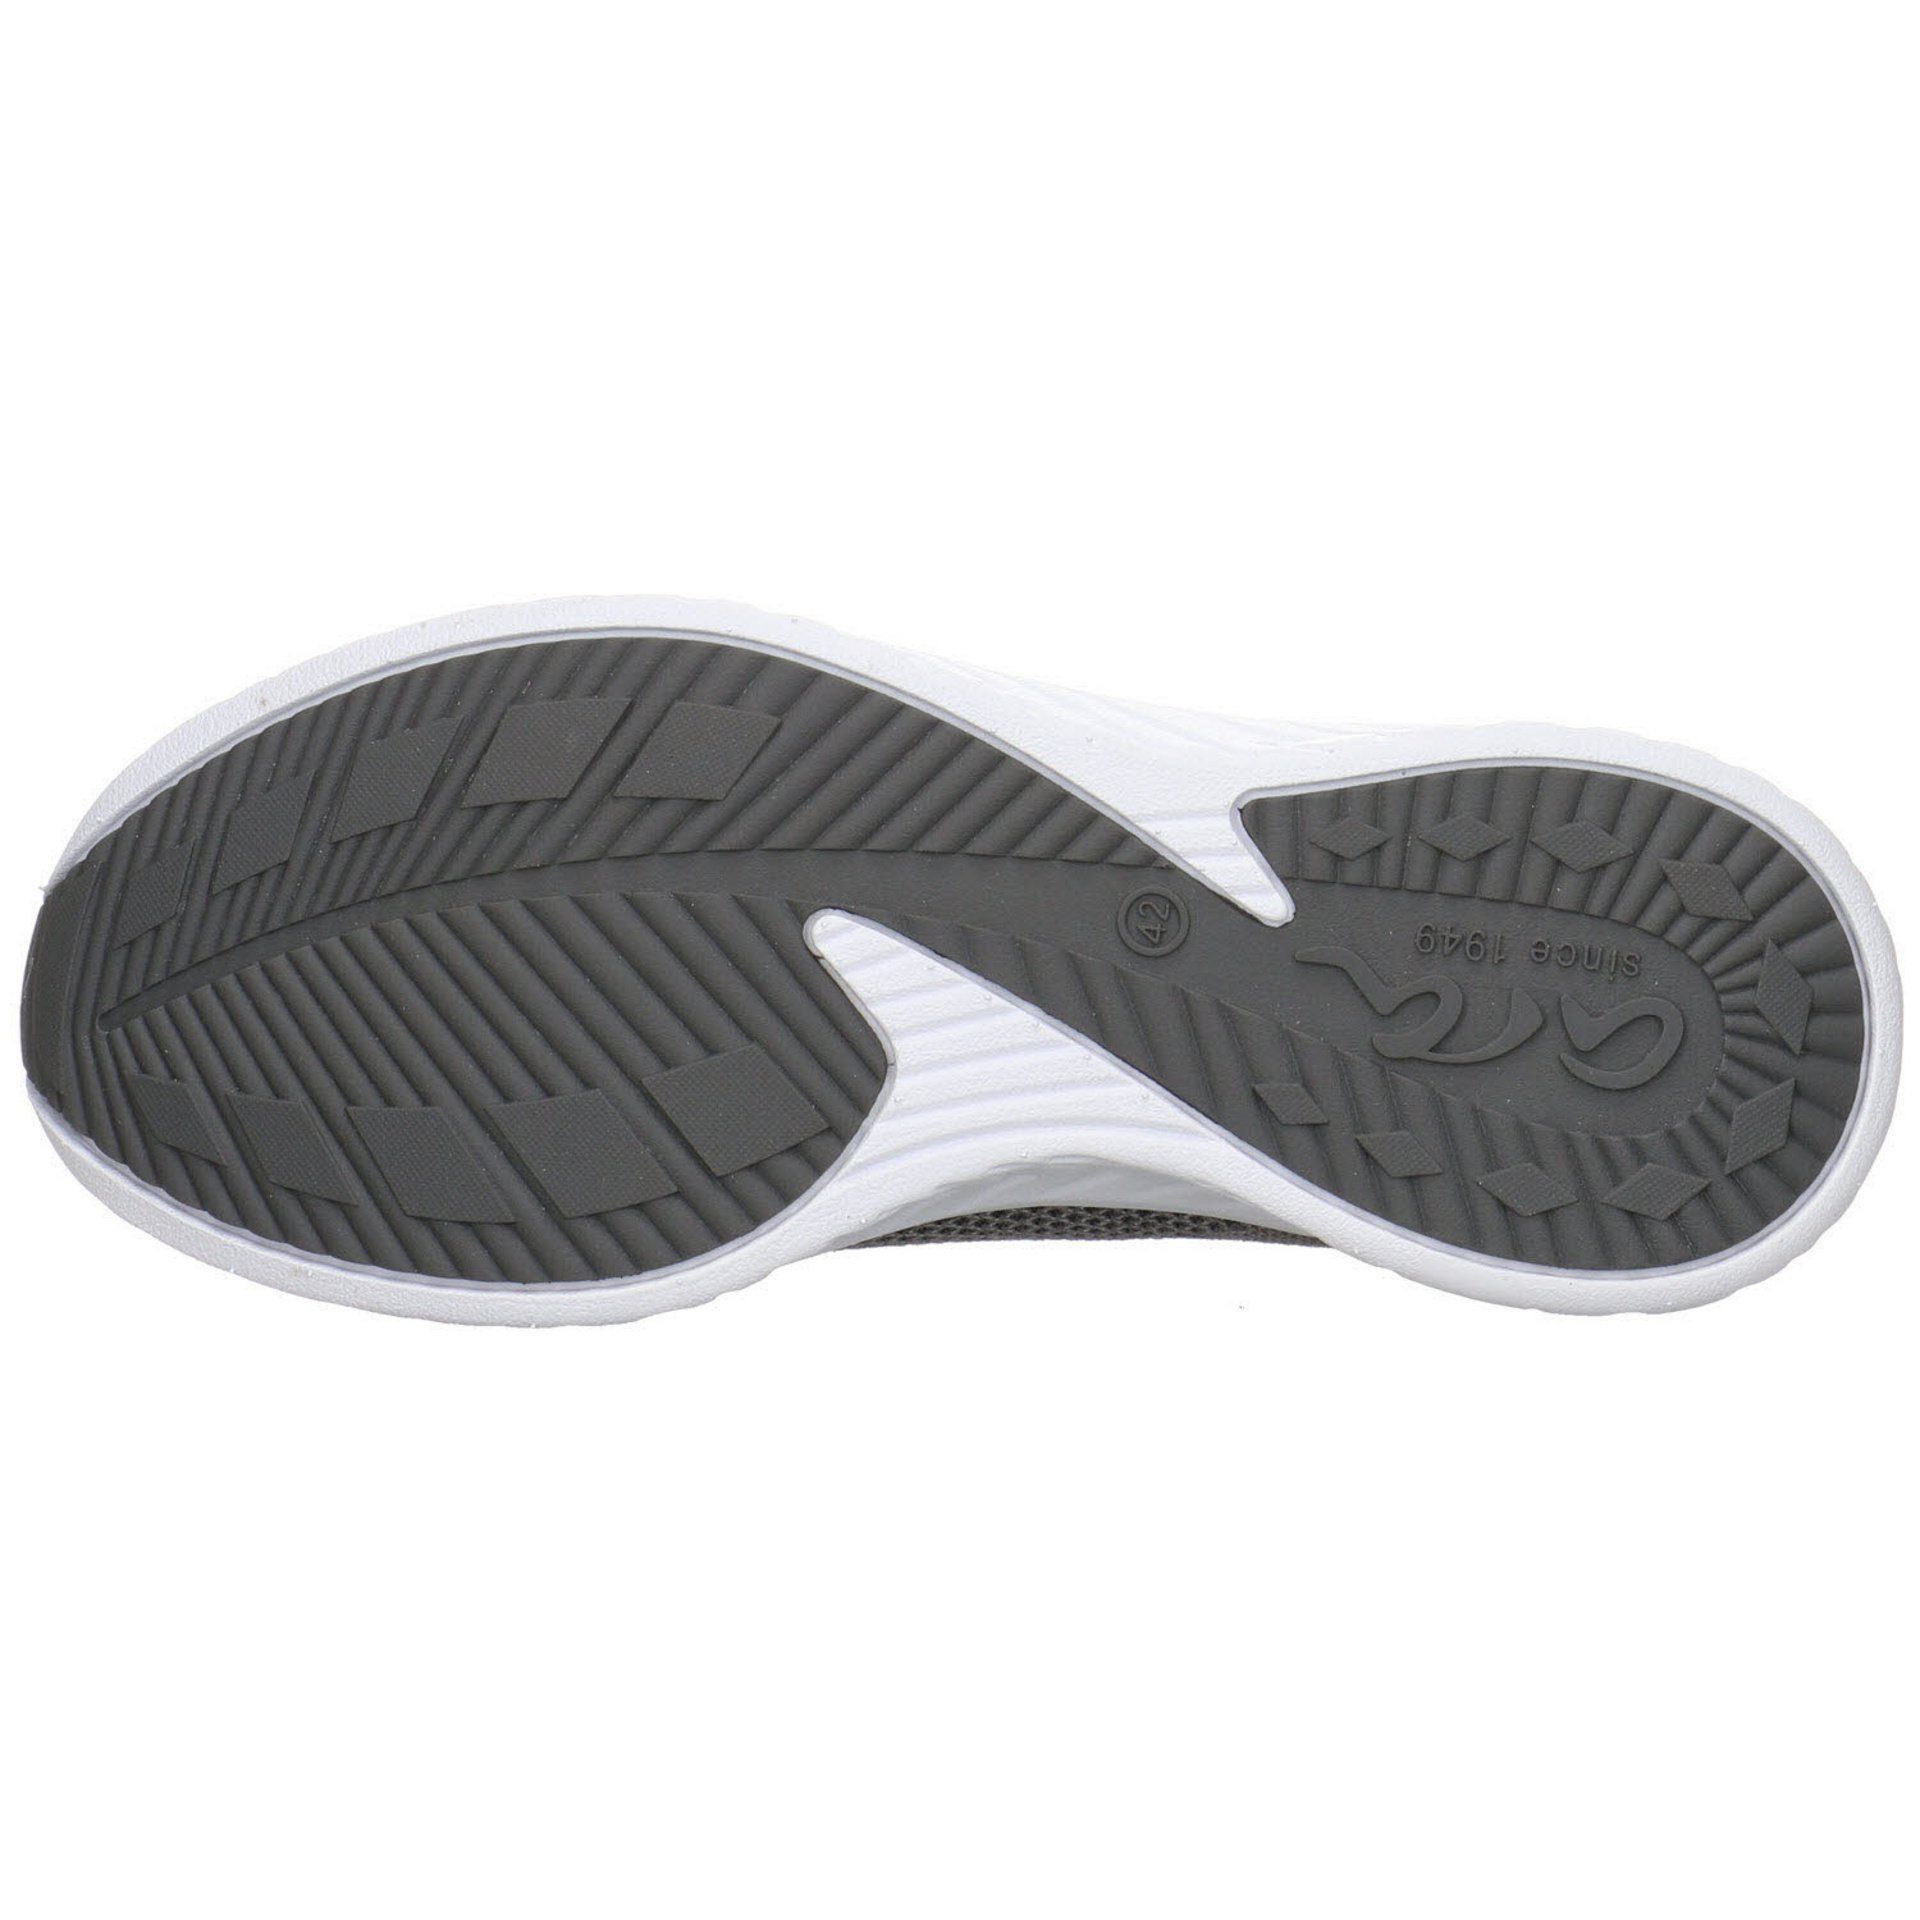 Schuhe grau Herren Slipper Ara Textil Slipper